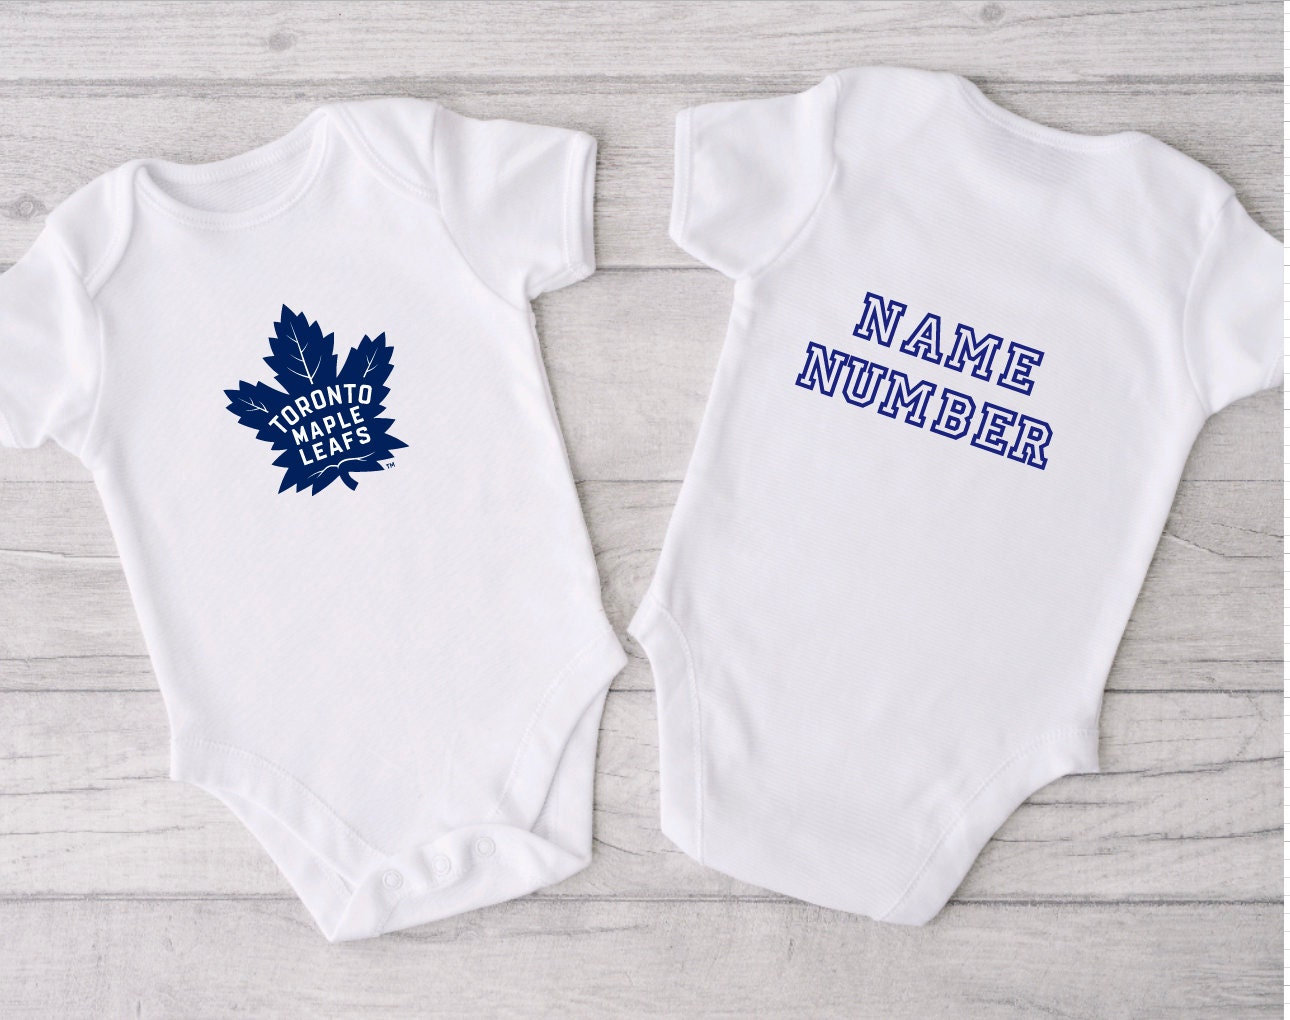 Toronto Maple Leafs Reebok Infant John Tavares Short Sleeve Player T-Shirt